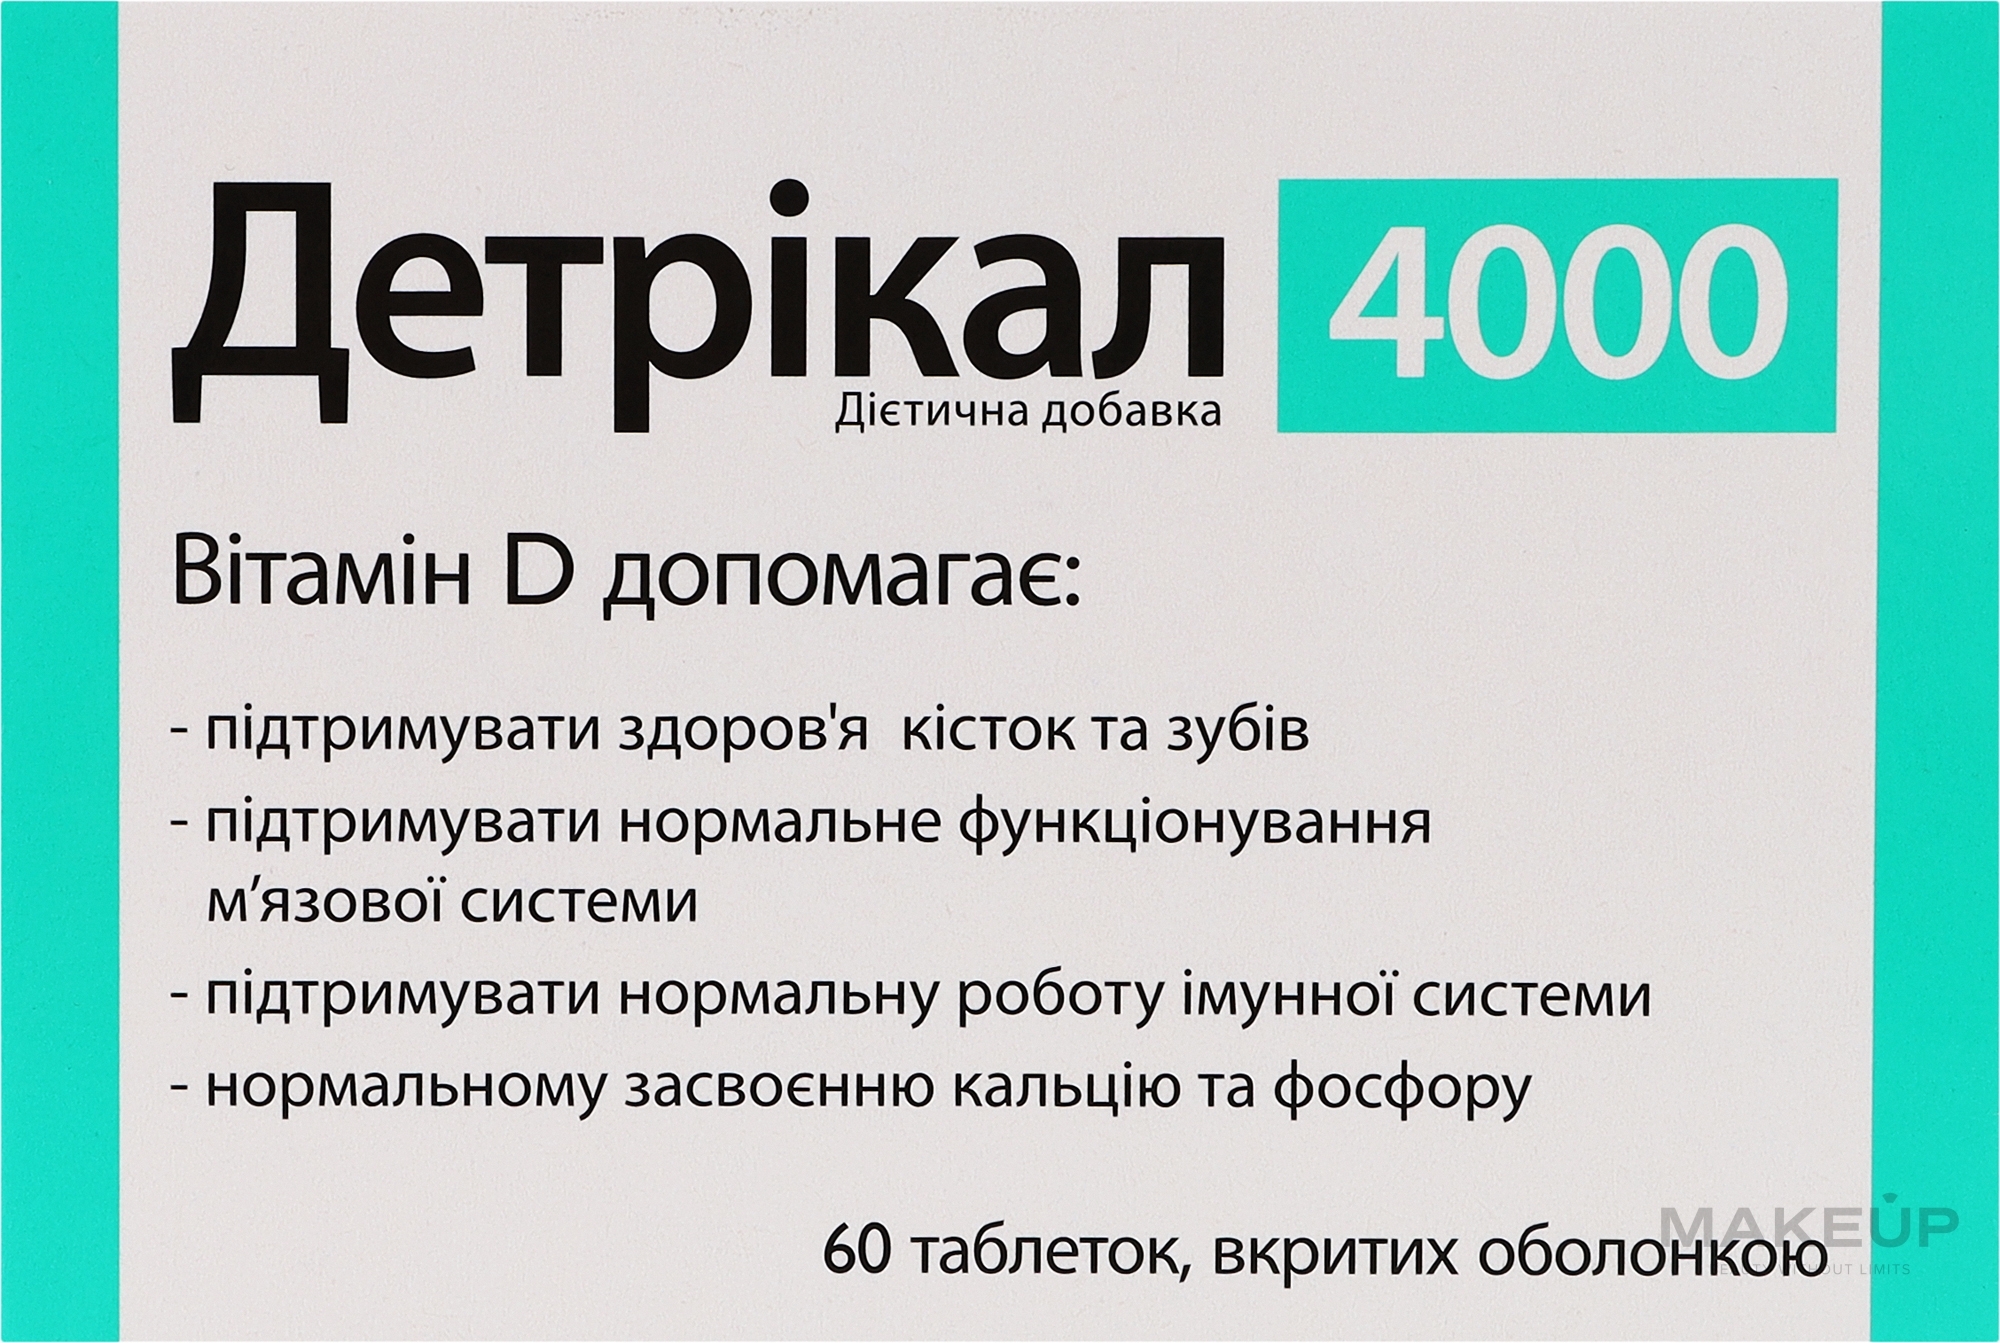 Диетическая добавка "Витамин D" - Zdrovit Detrical 4000 — фото 60шт